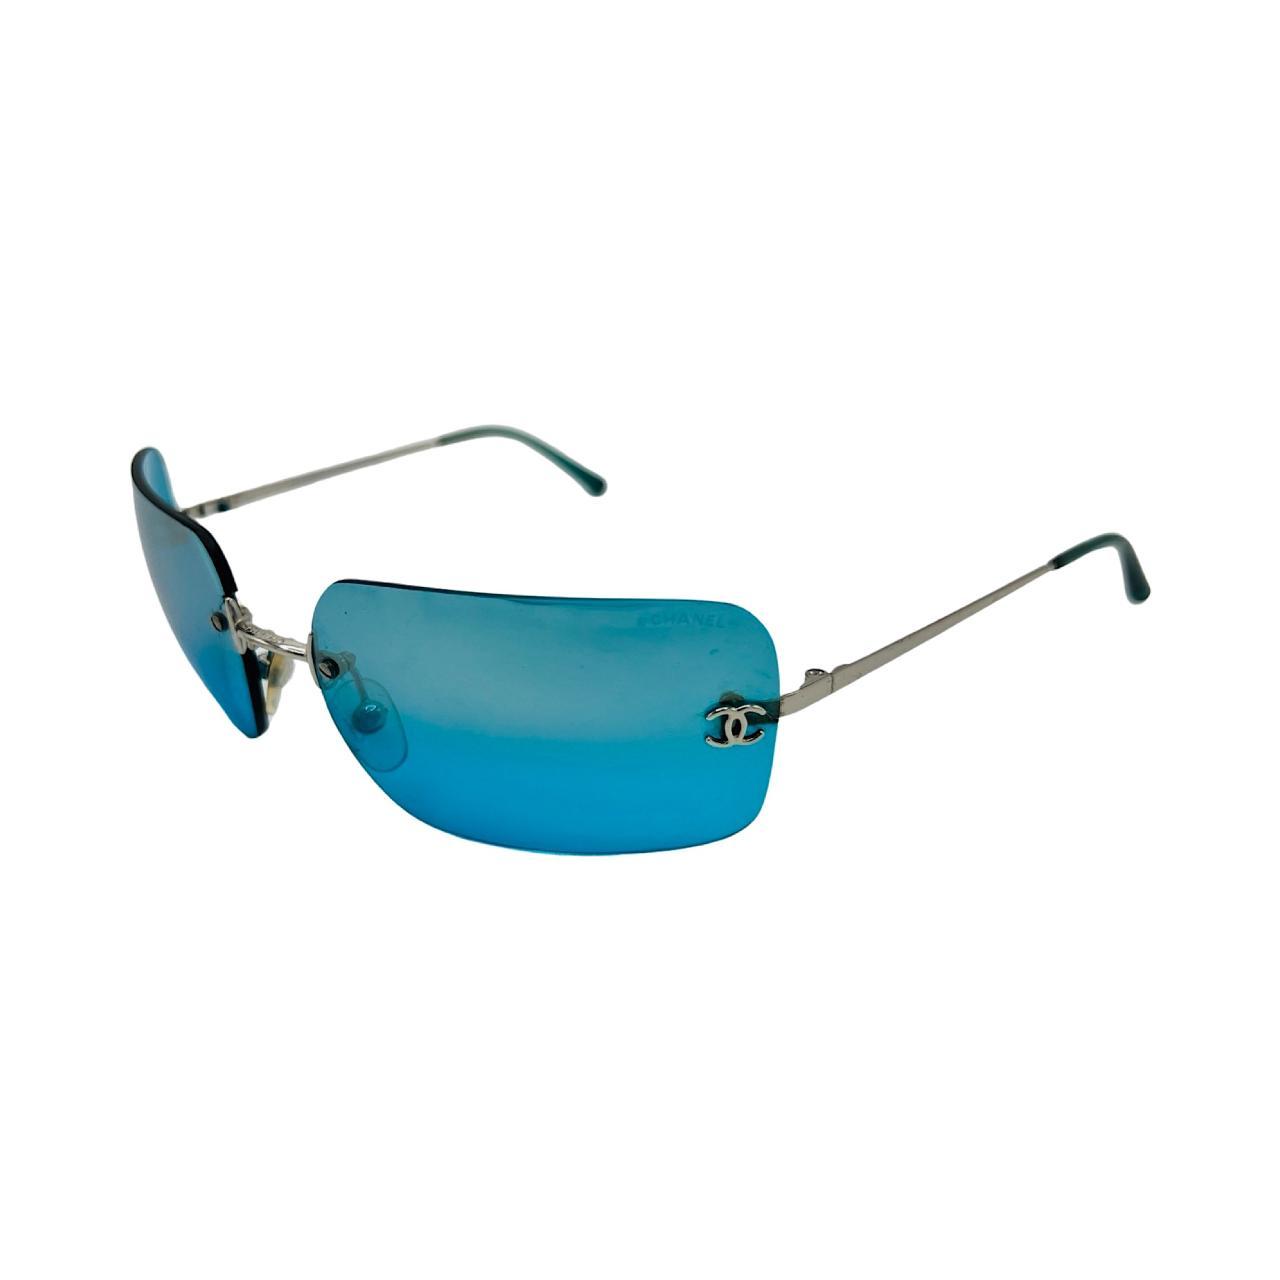 CHANEL Rimless Sunglasses for Men for sale